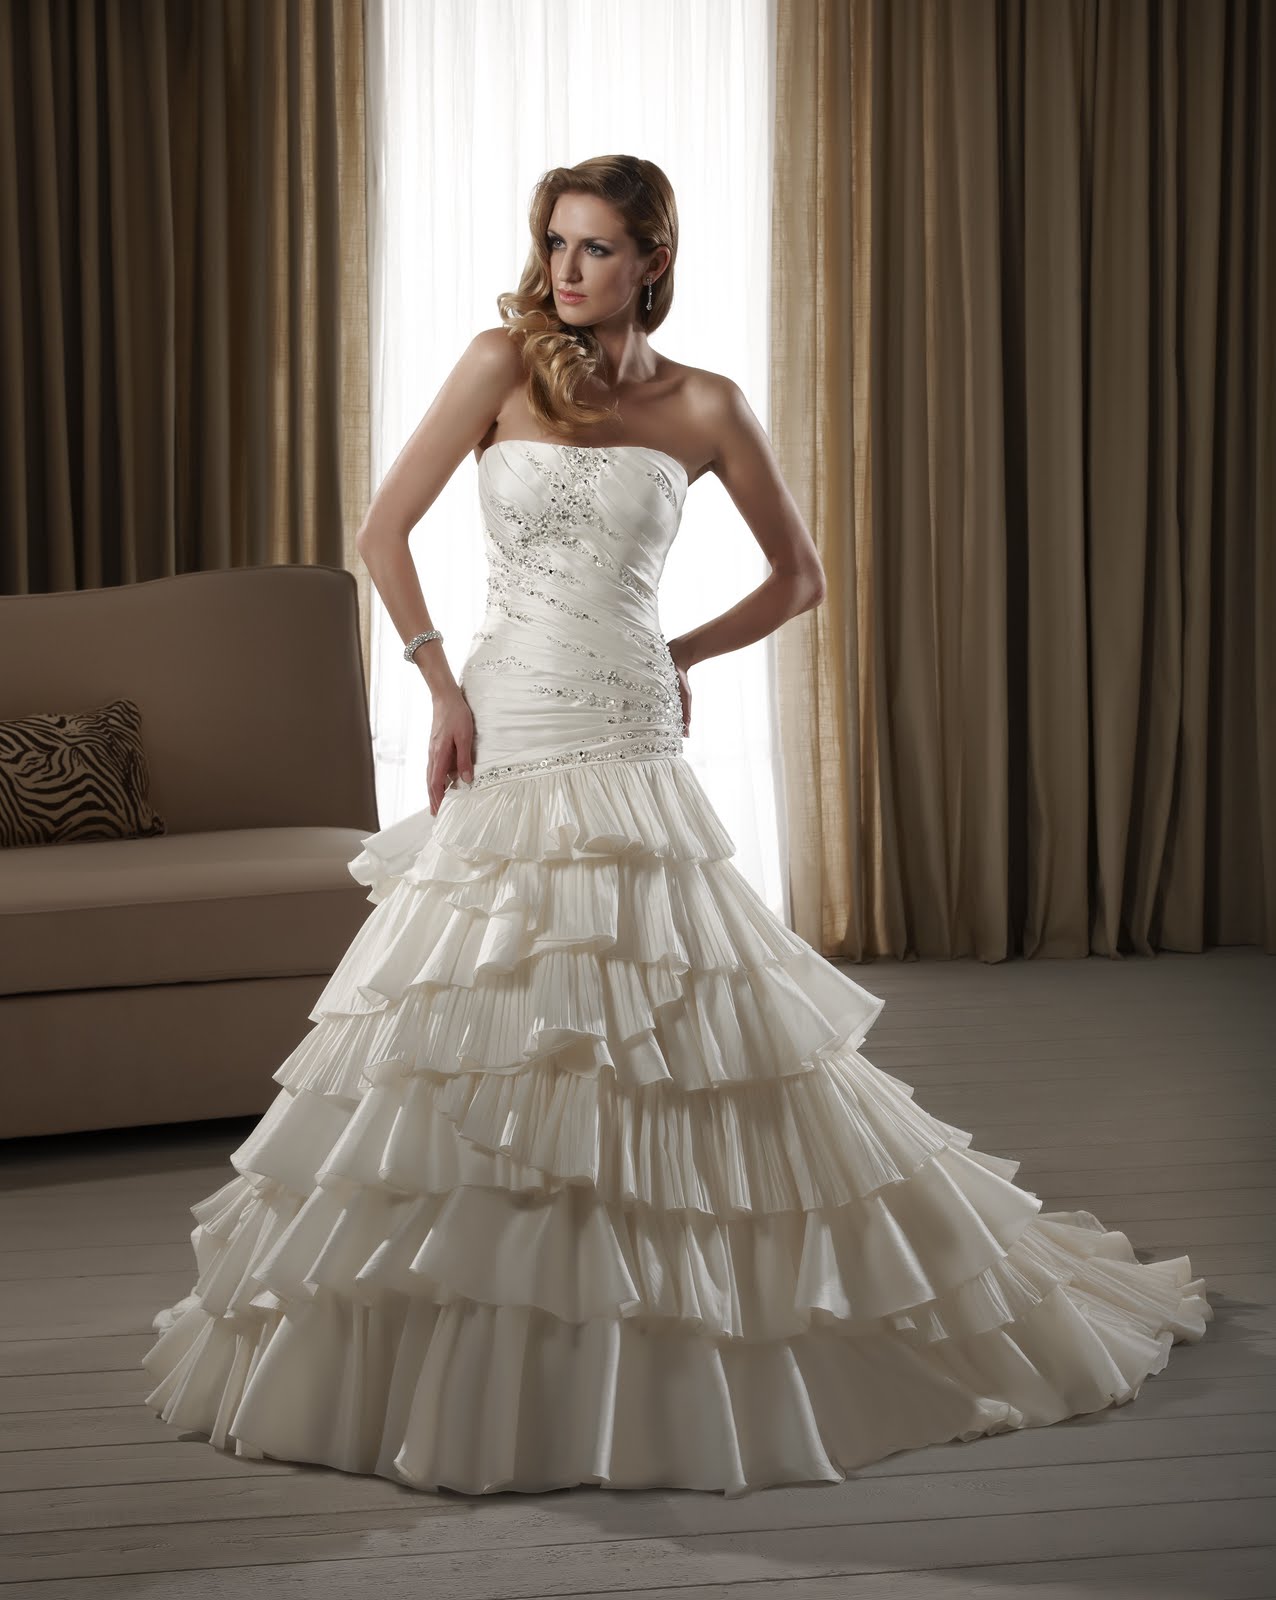 Blog: Sneak Peek - Fall 2011 Bridal Gown Collection